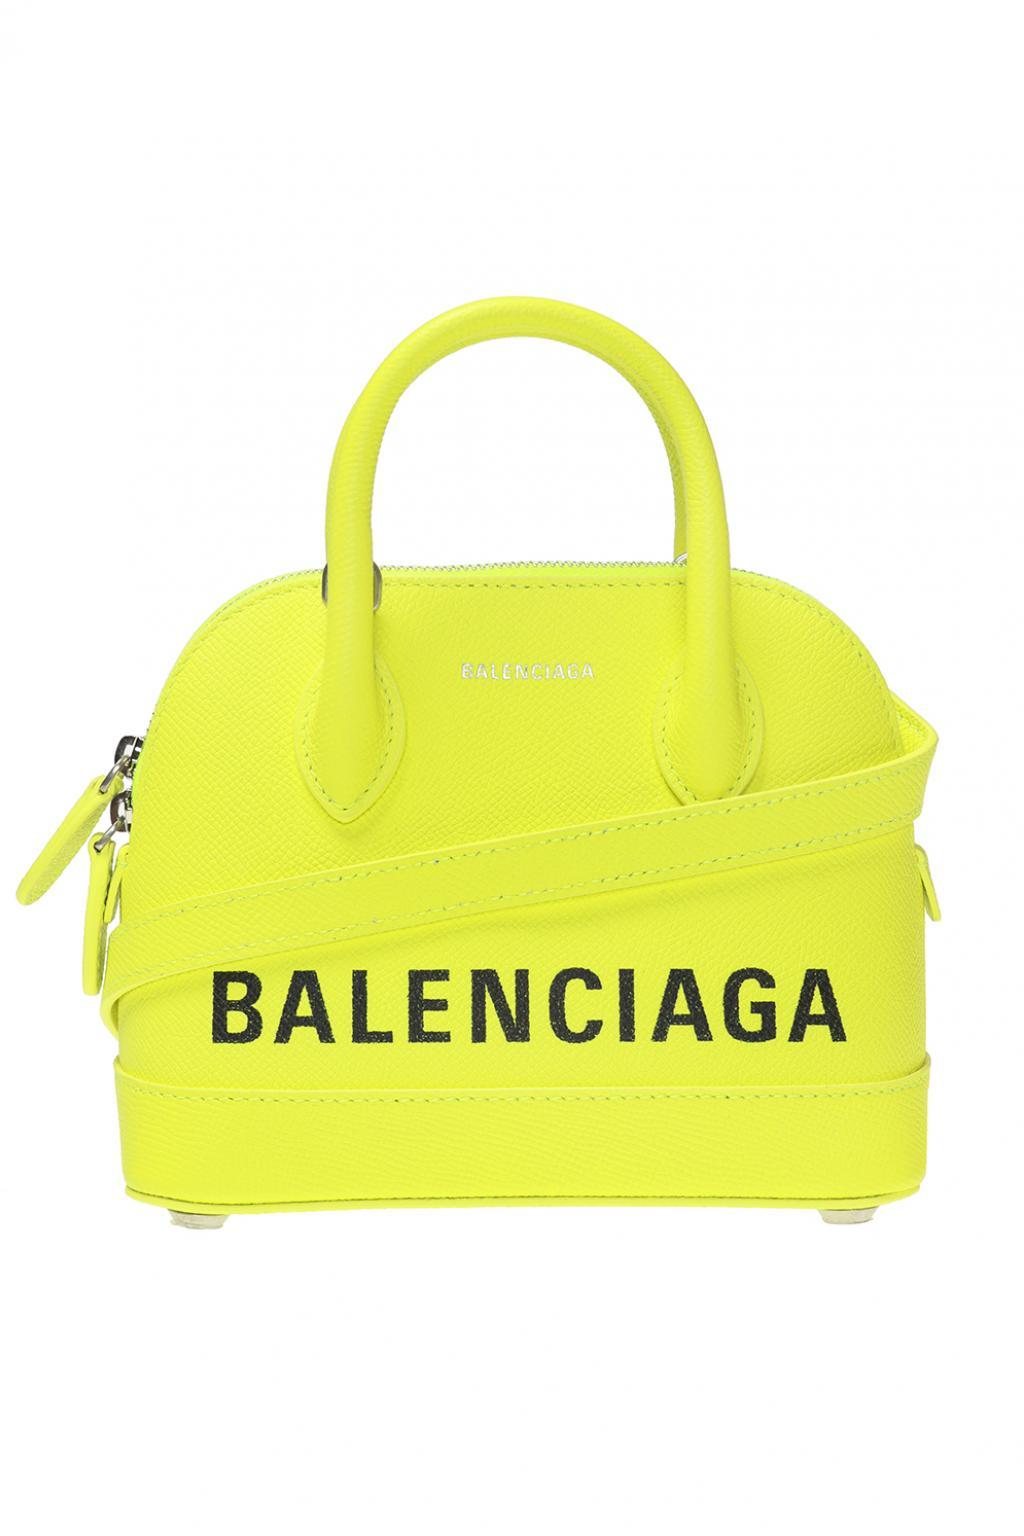 Balenciaga Leather Logo-printed Shoulder Bag in Neon (Yellow) | Lyst